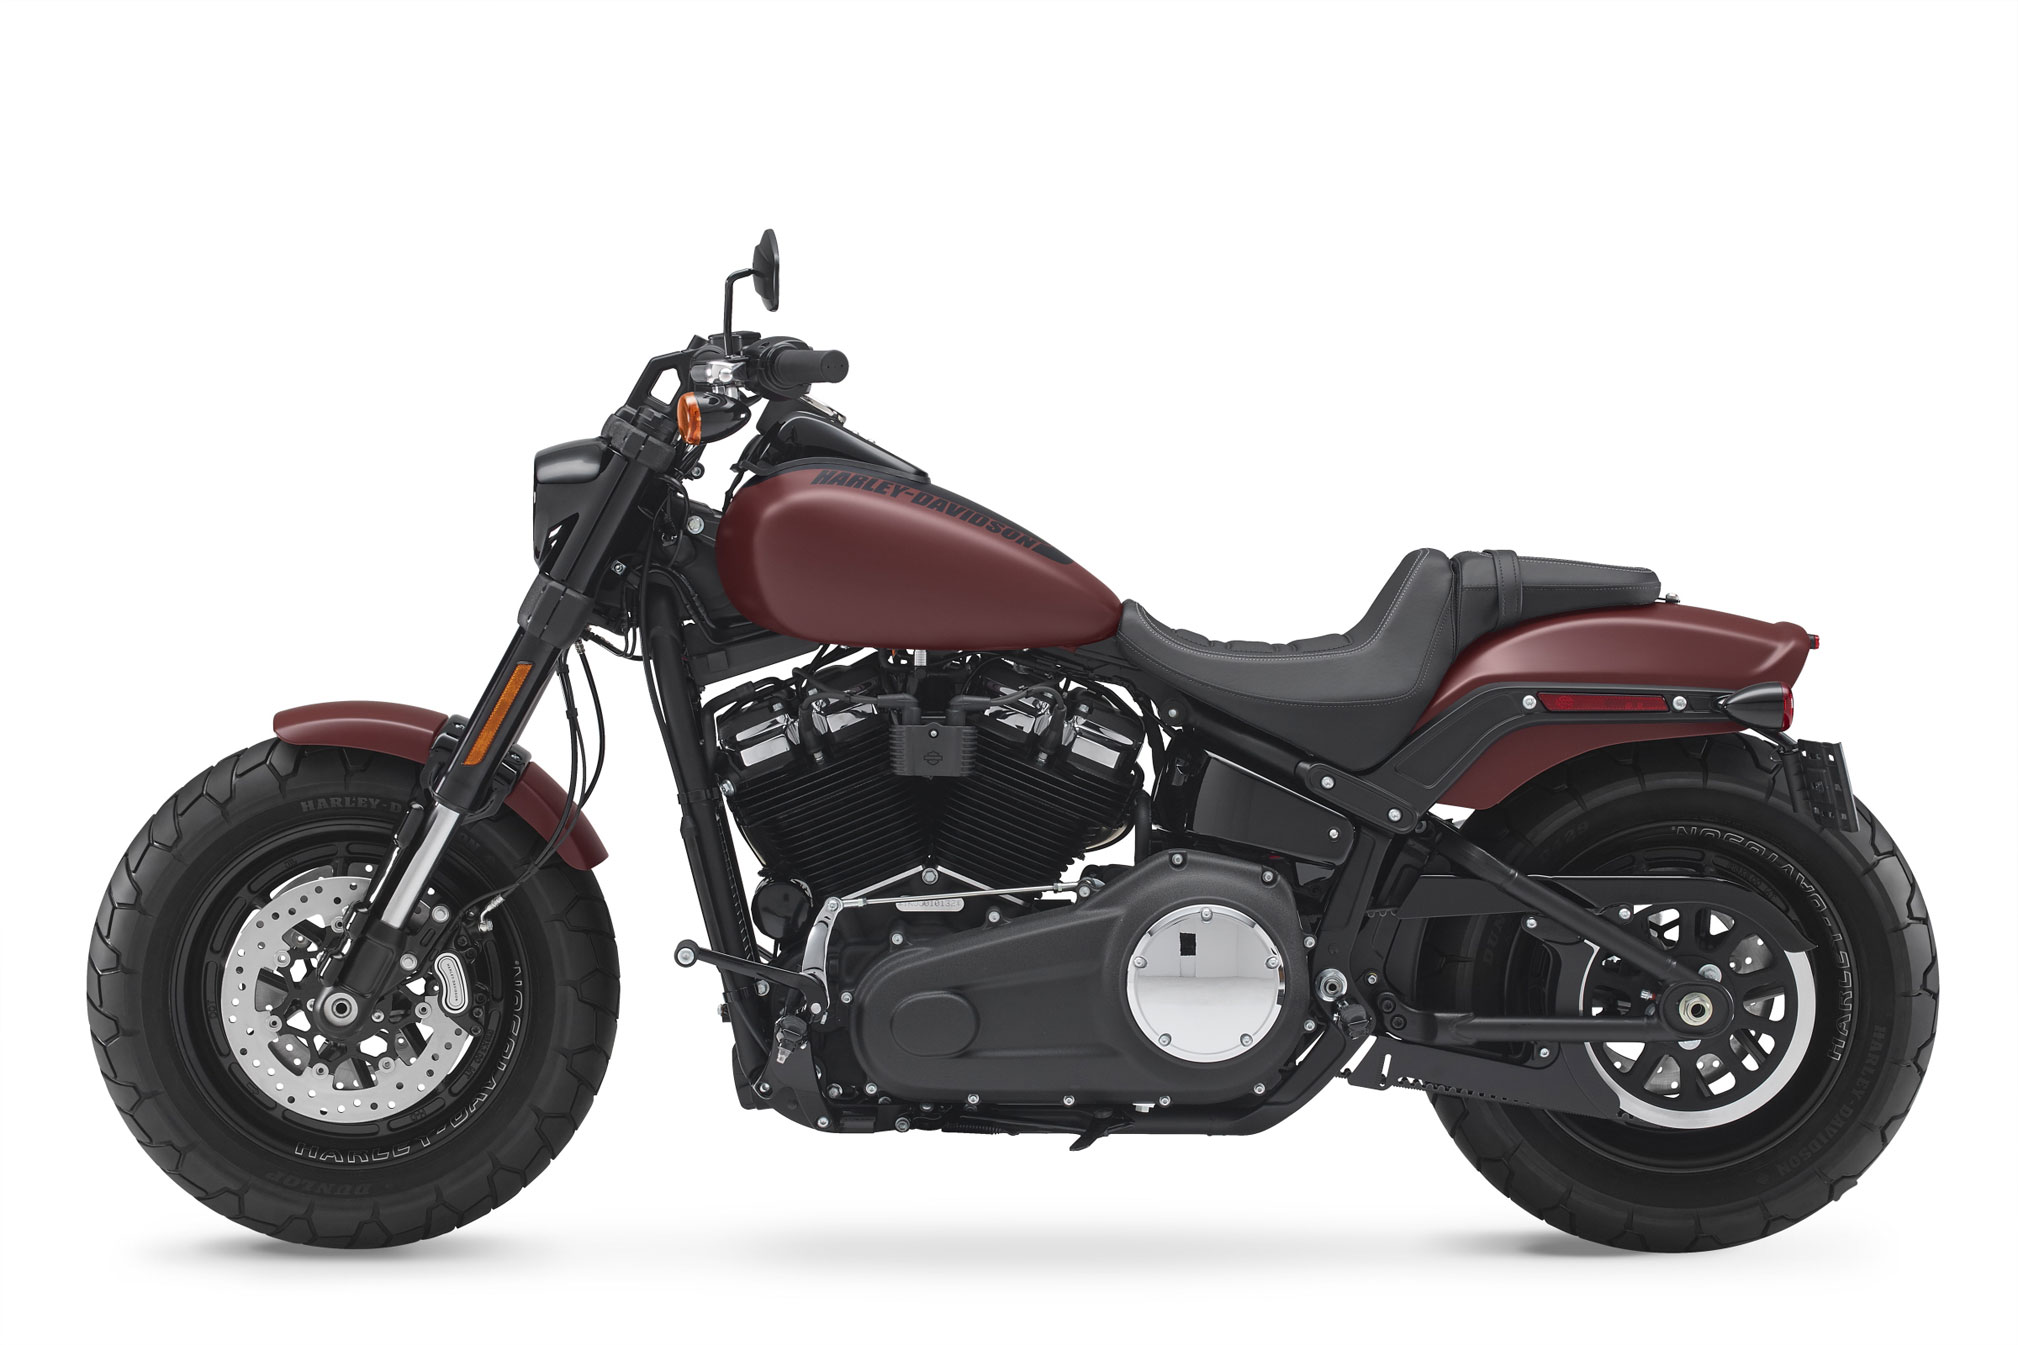 2019 Harley Davidson Fat Bob Review Total Motorcycle